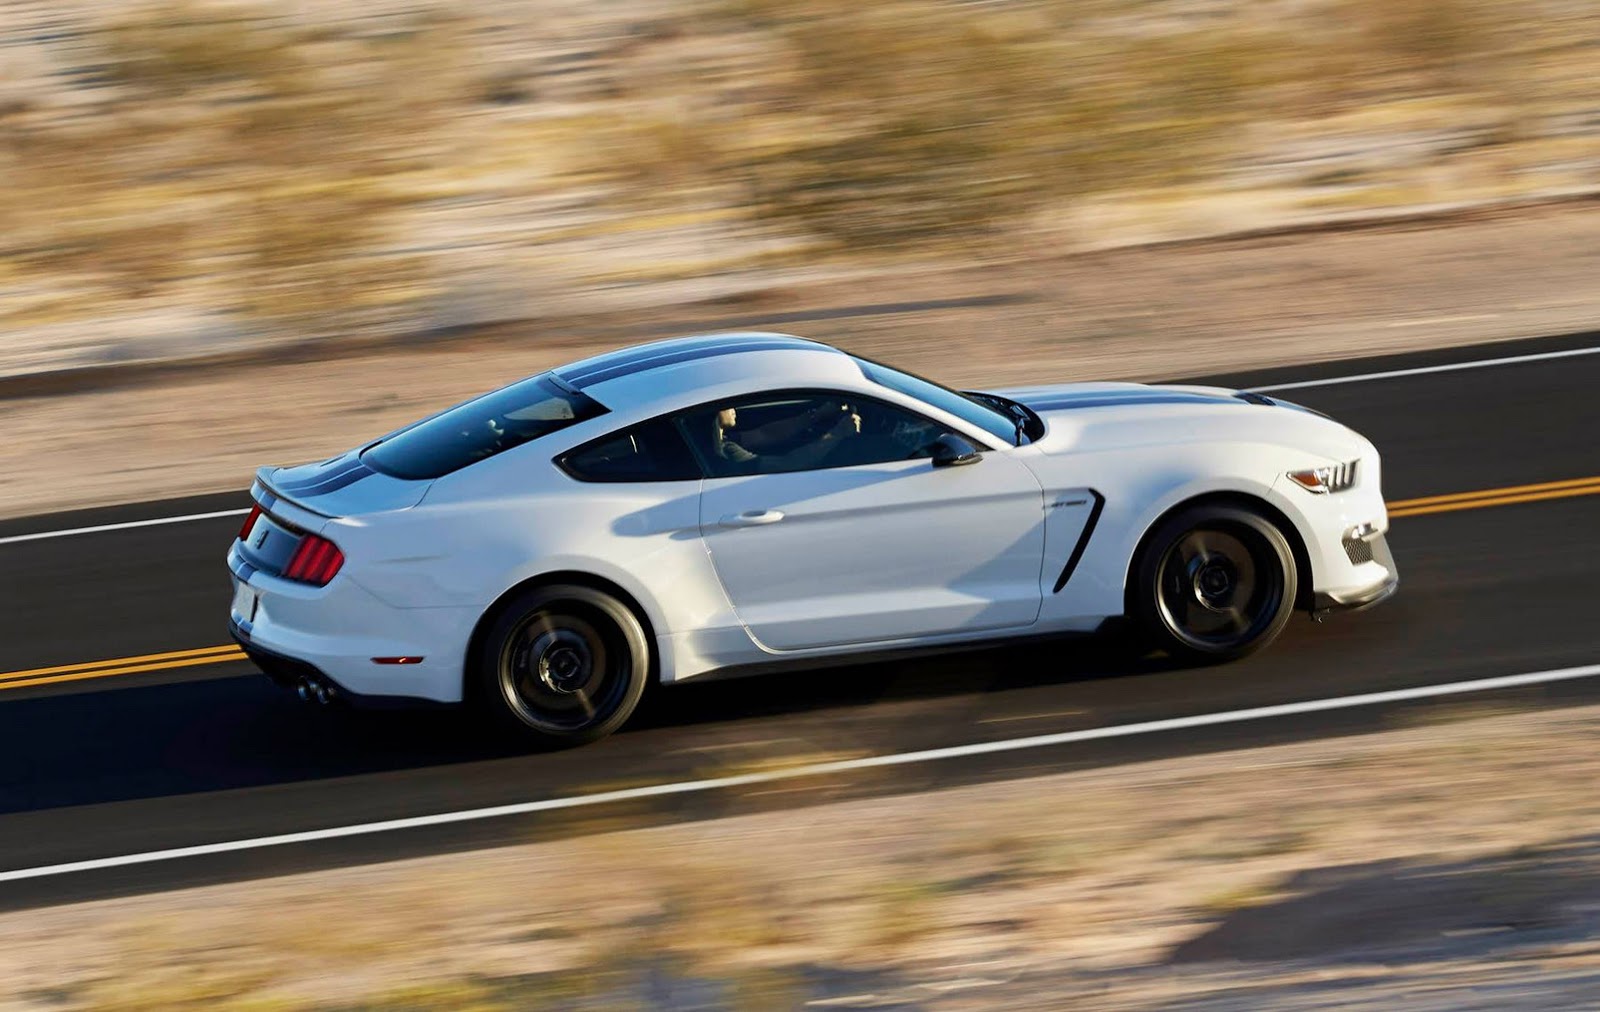 Ford เตรียมเปิดตัว Mustang Shelby GT350 รุ่นใหม่ล่าสุดให้